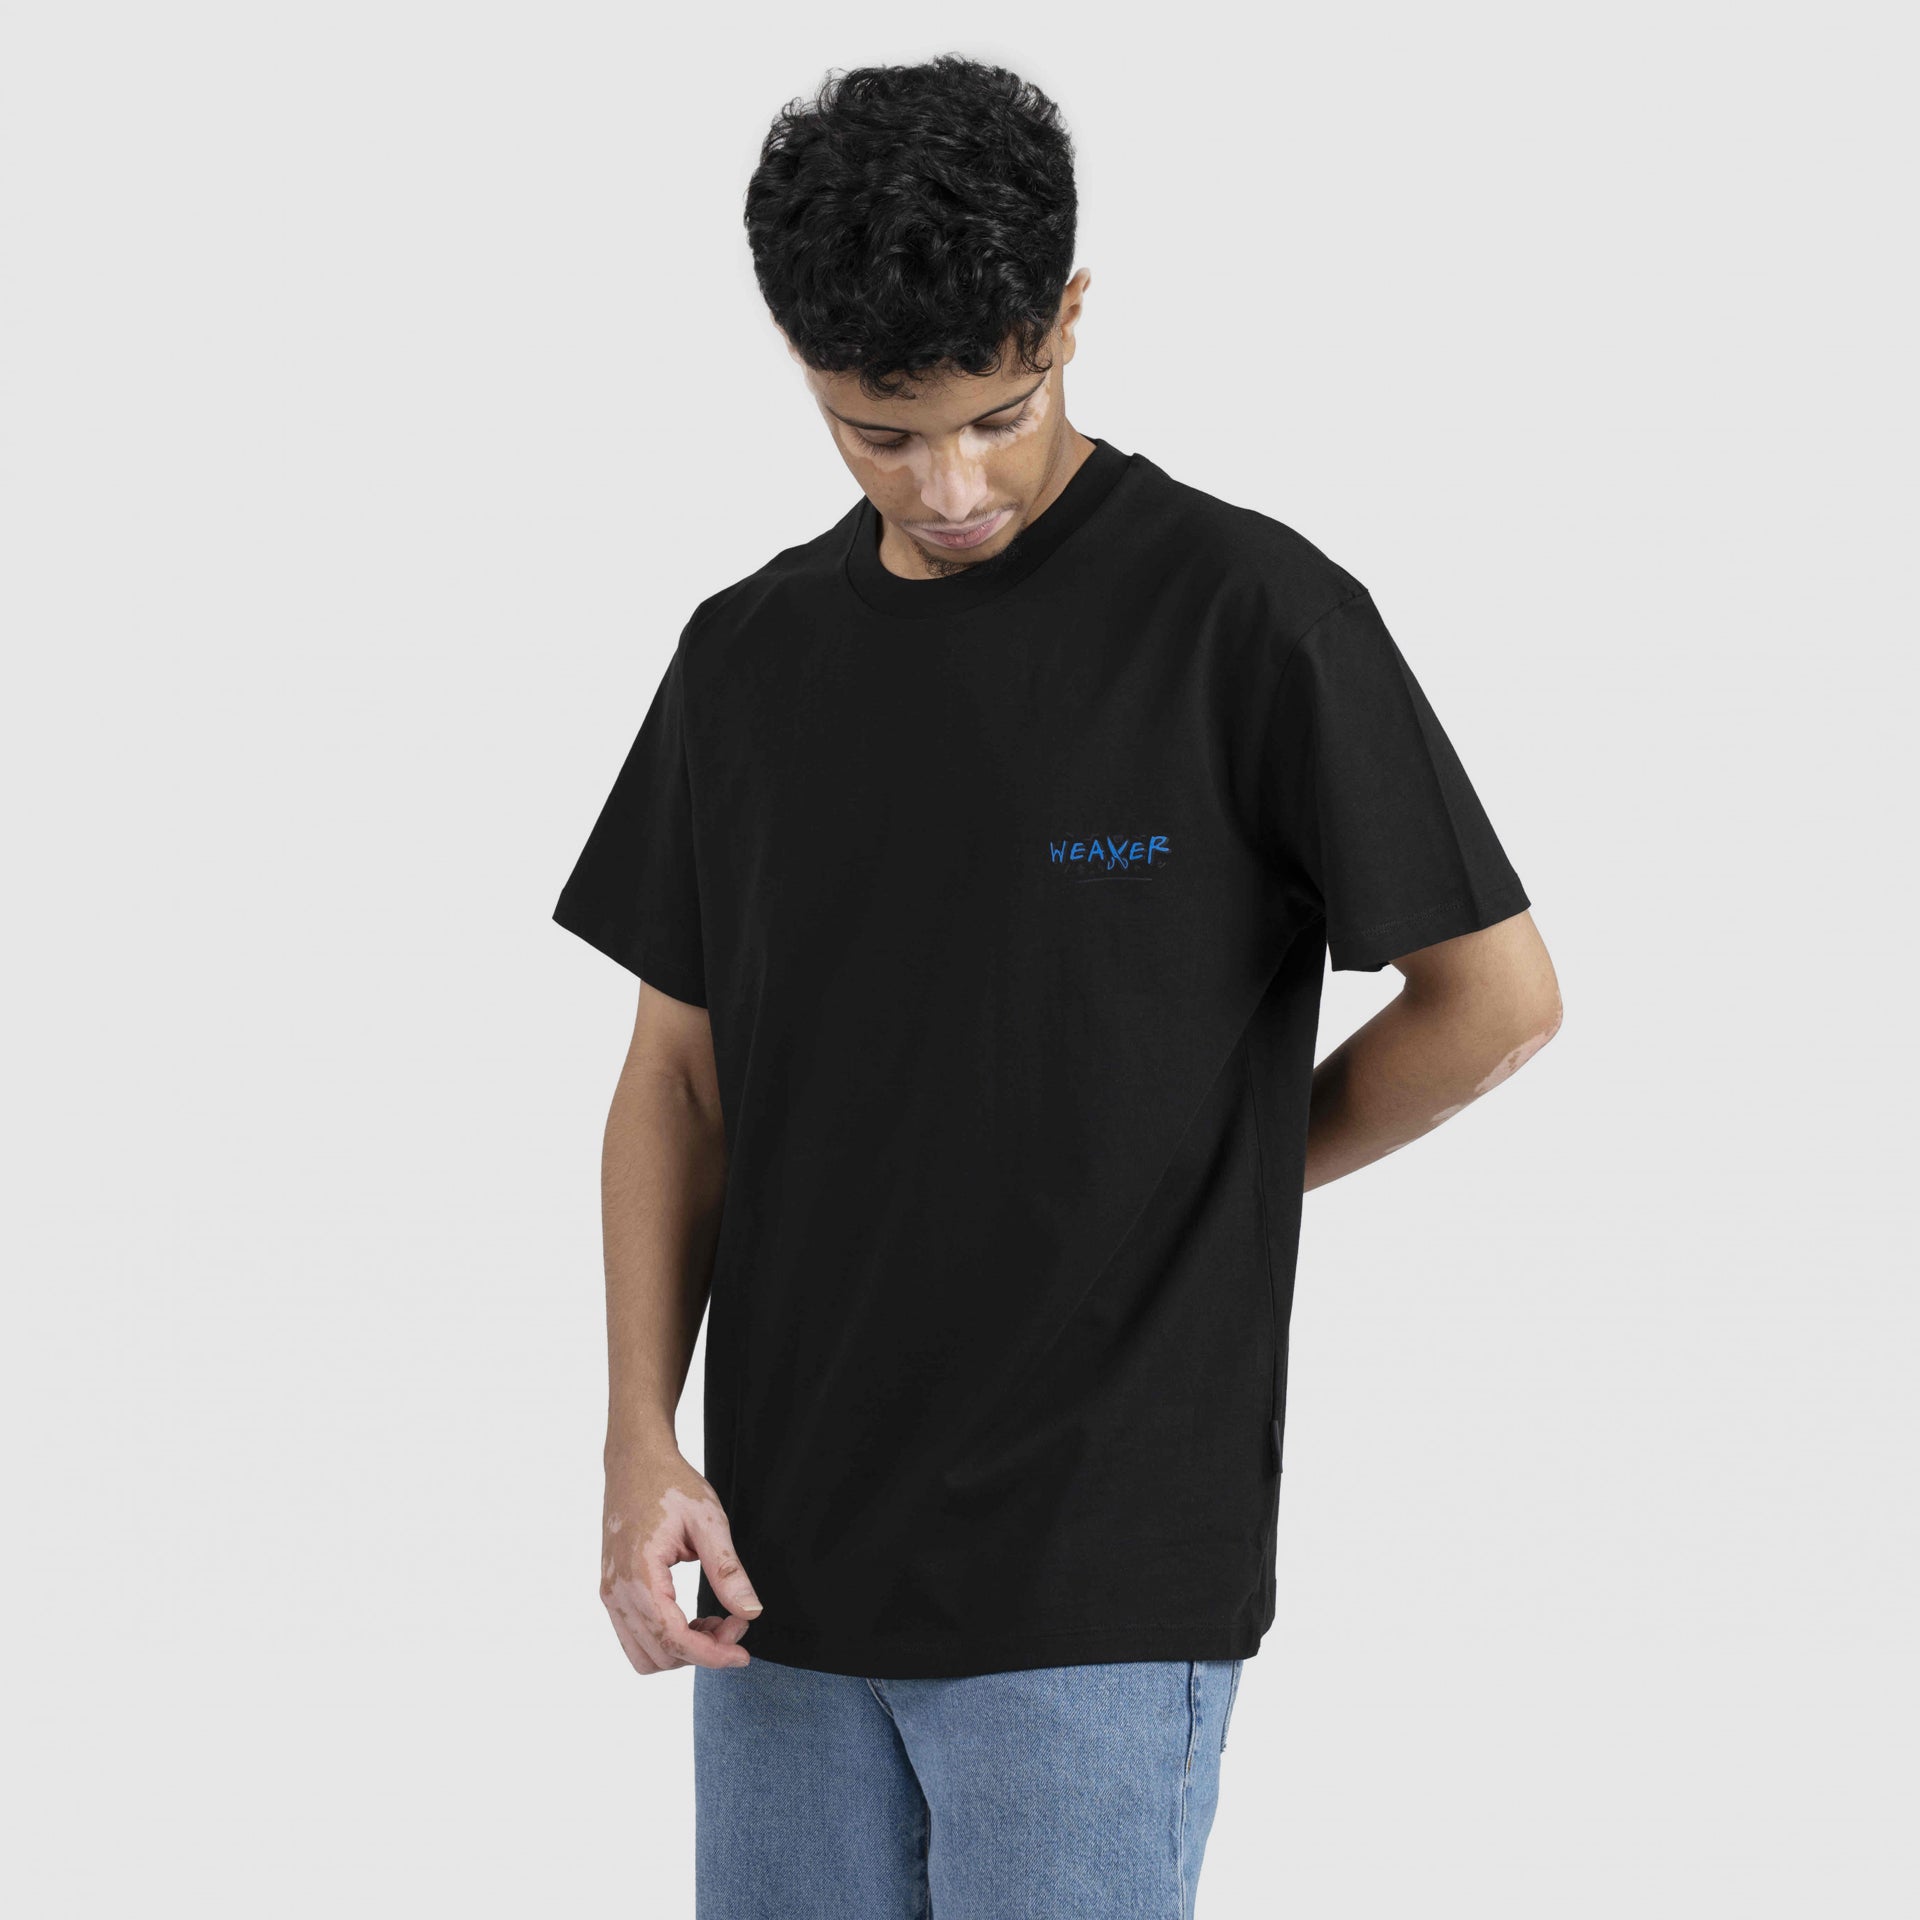 Black Classic T-shirt From Weaver Design